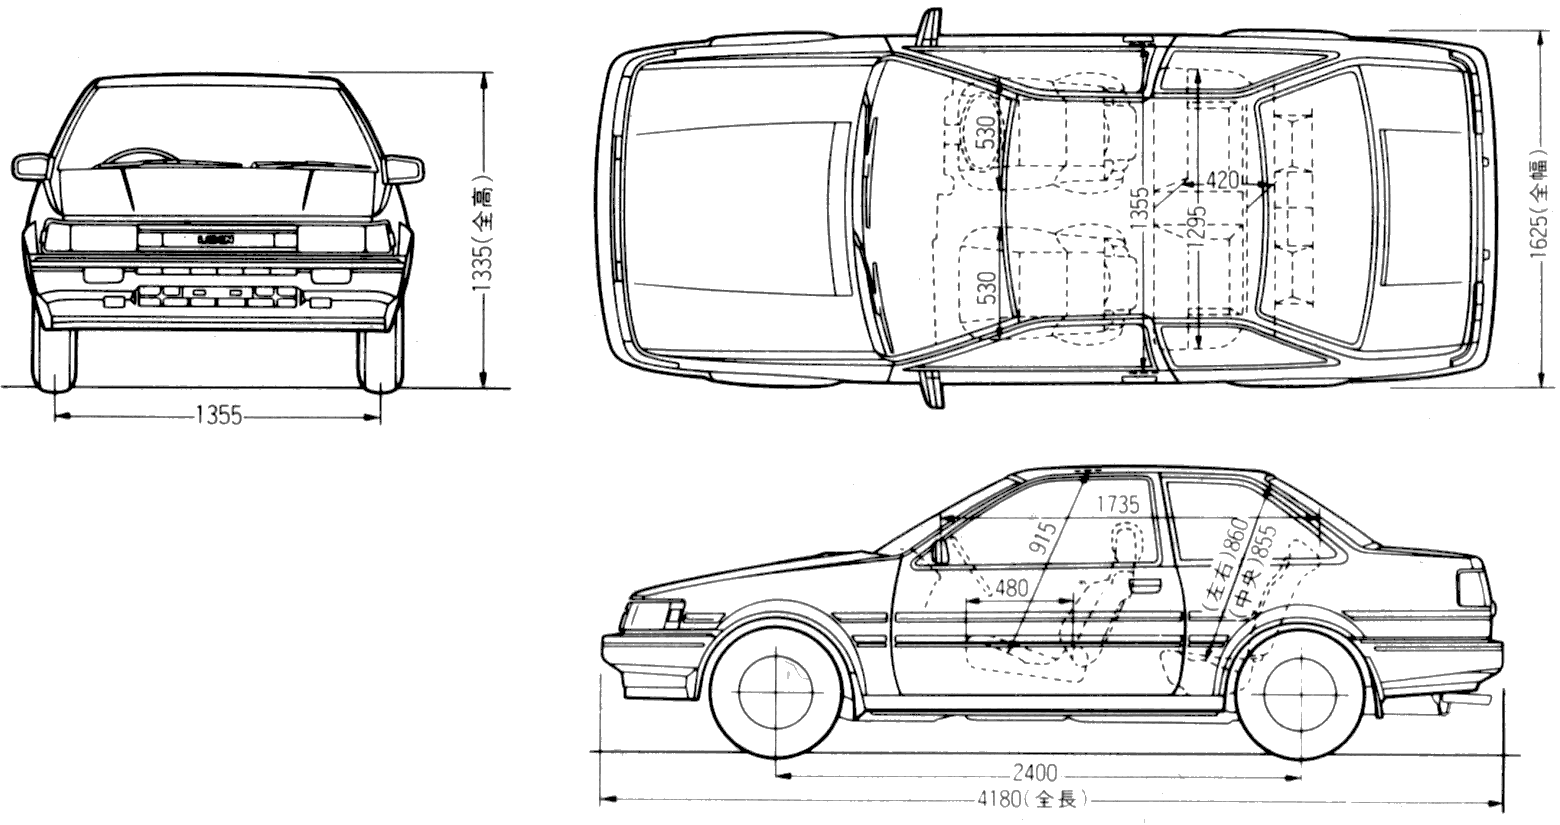 Toyota AE86 blueprint